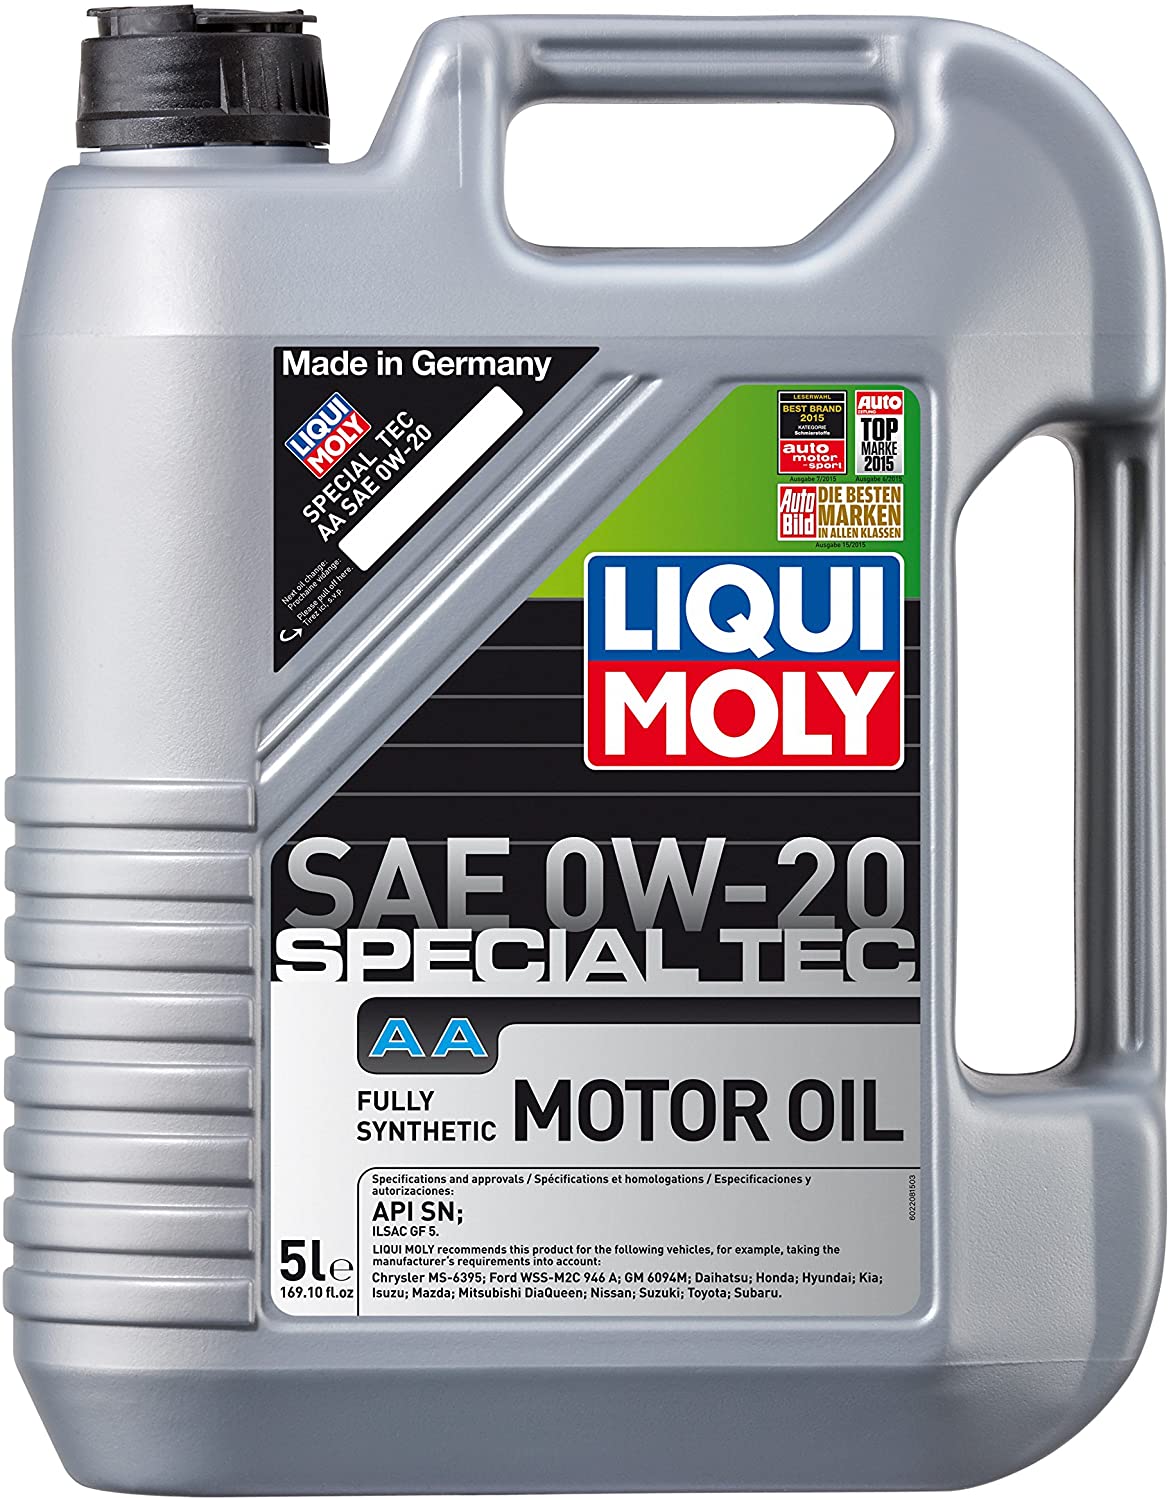 Liqui Moly Special Tec AA 0W20 Engine Oil (5 Liter) - 2208 - GenRacer